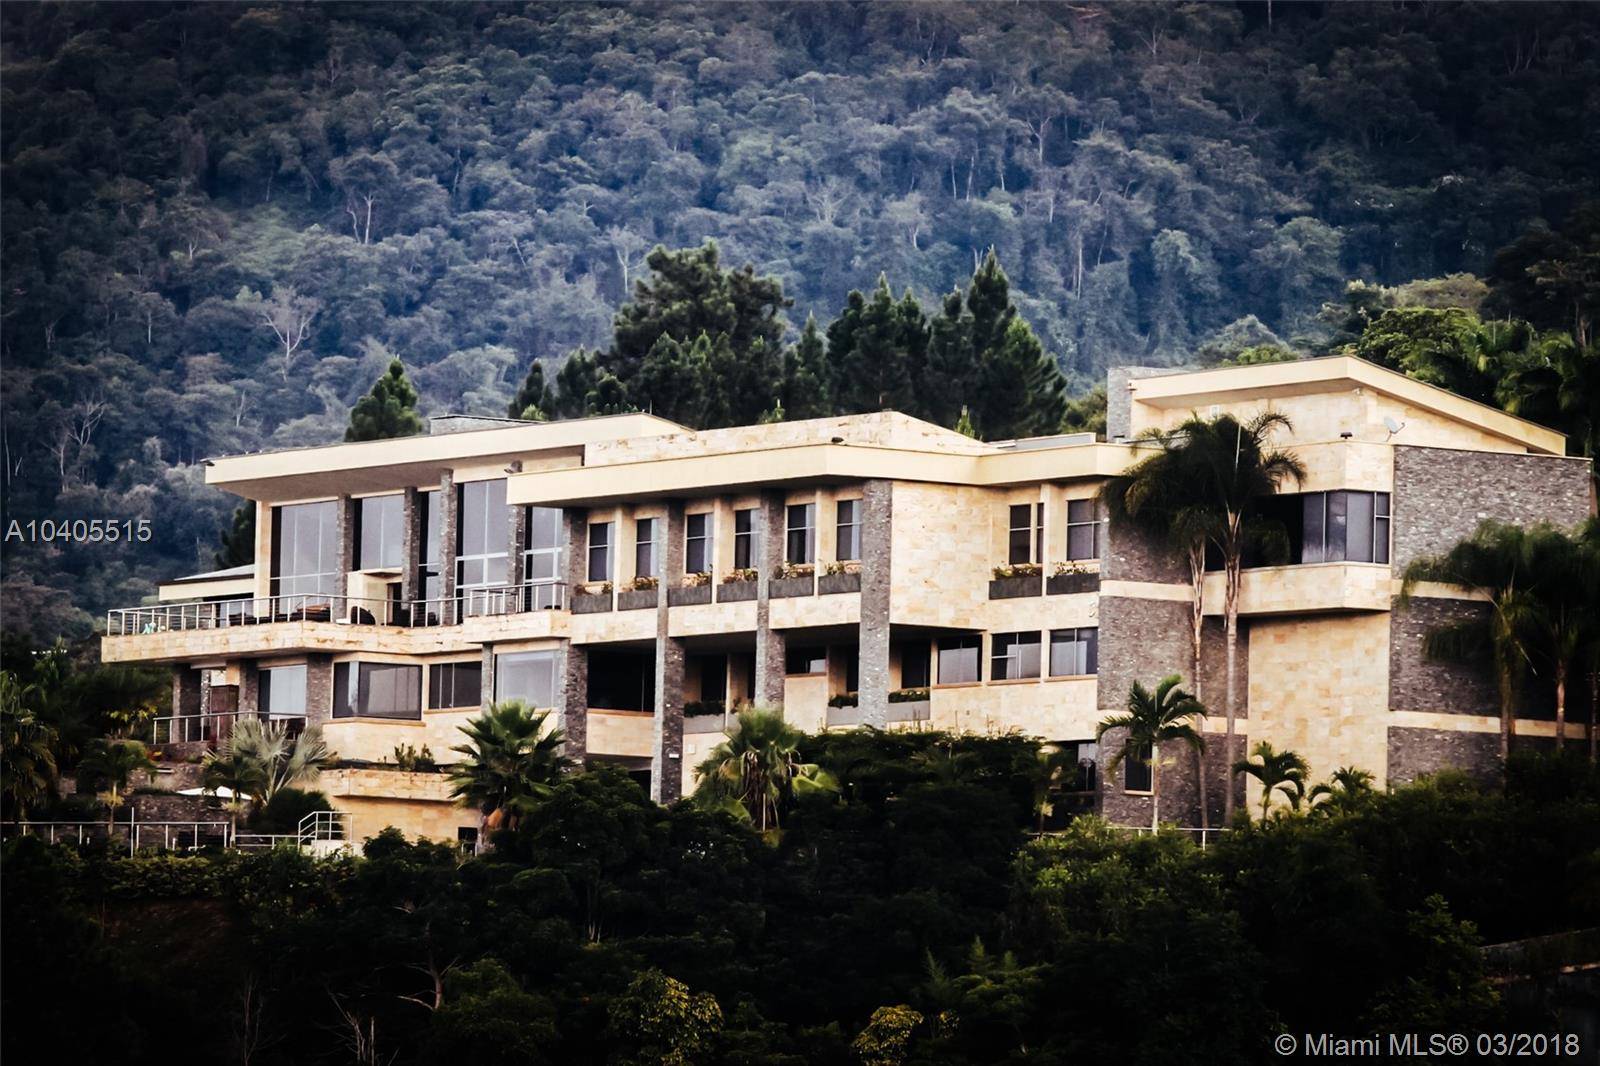 Opulence awaits at Quinta Warairarepano, the premier mountainside estate located in Venezuela.